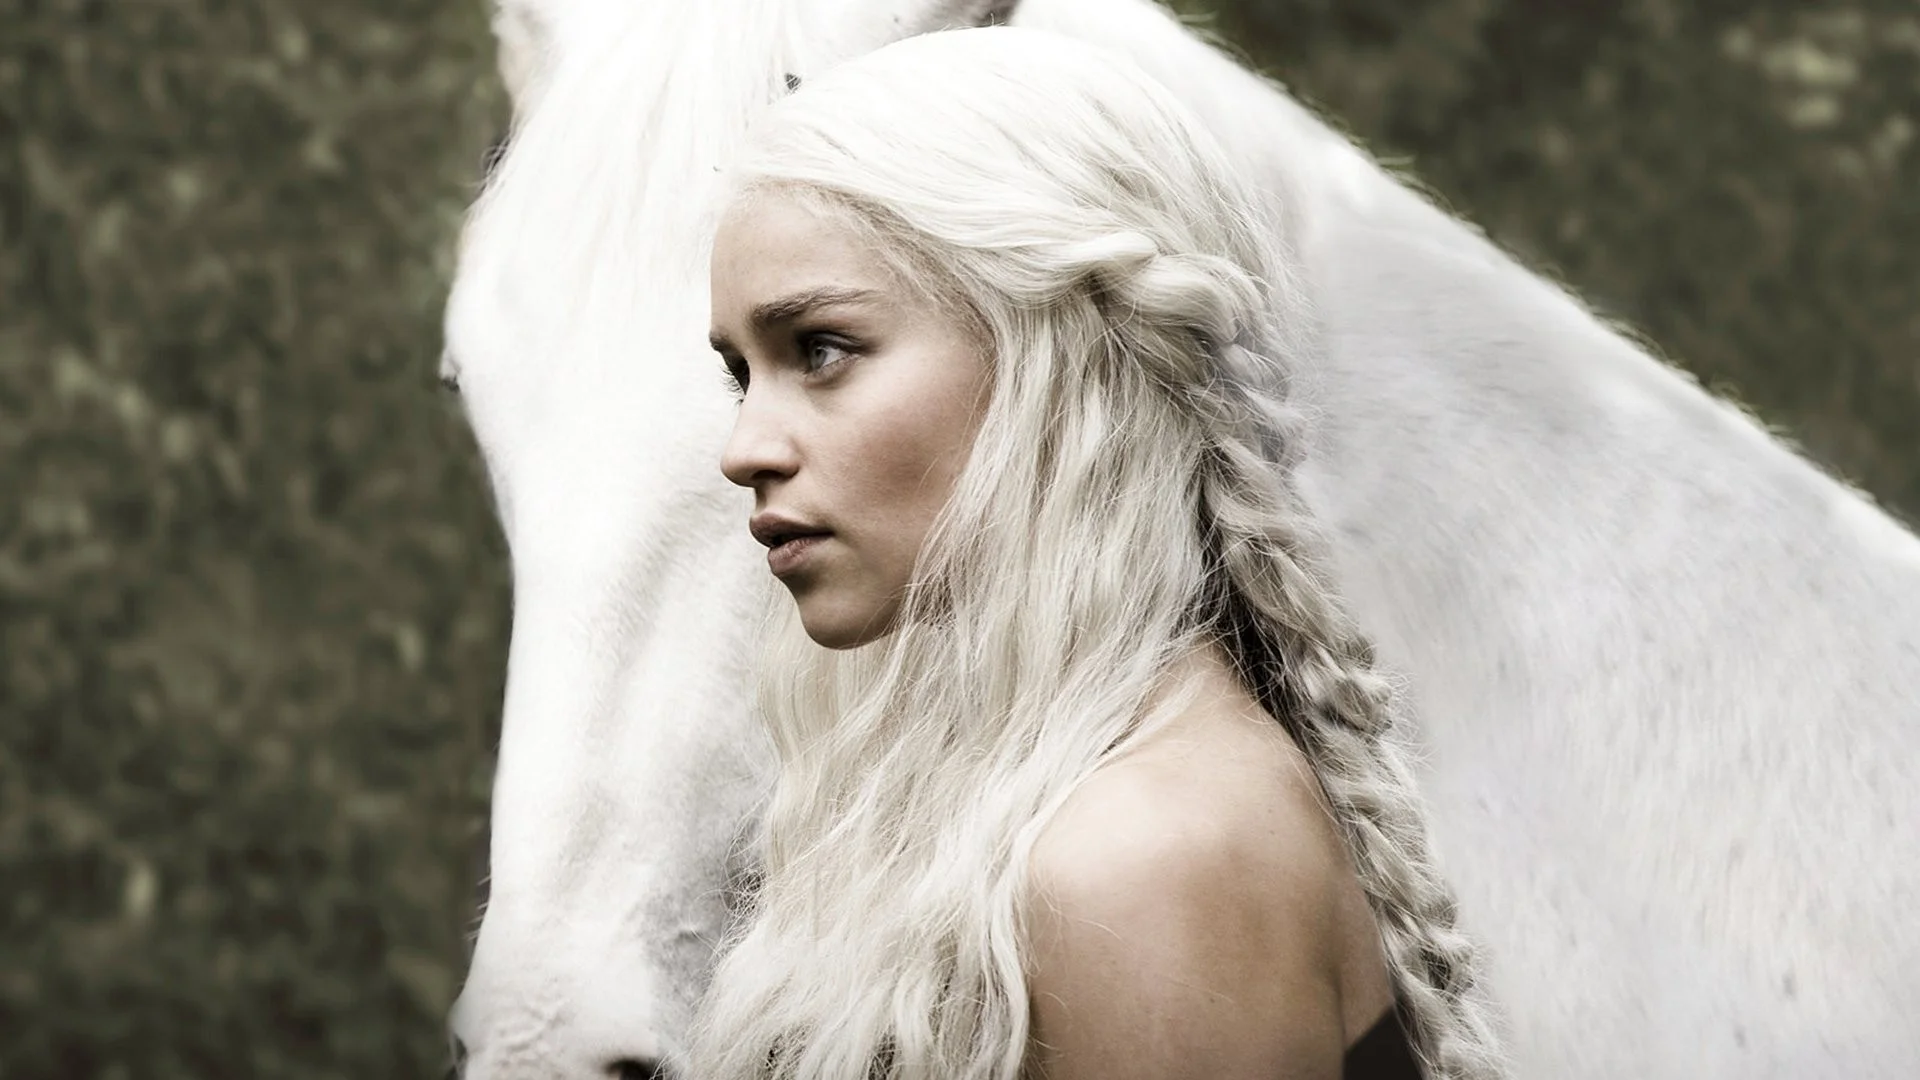 Daenerys-Targaryen-and-White-Horse-Game-of-Thrones-HD-Wallpaper